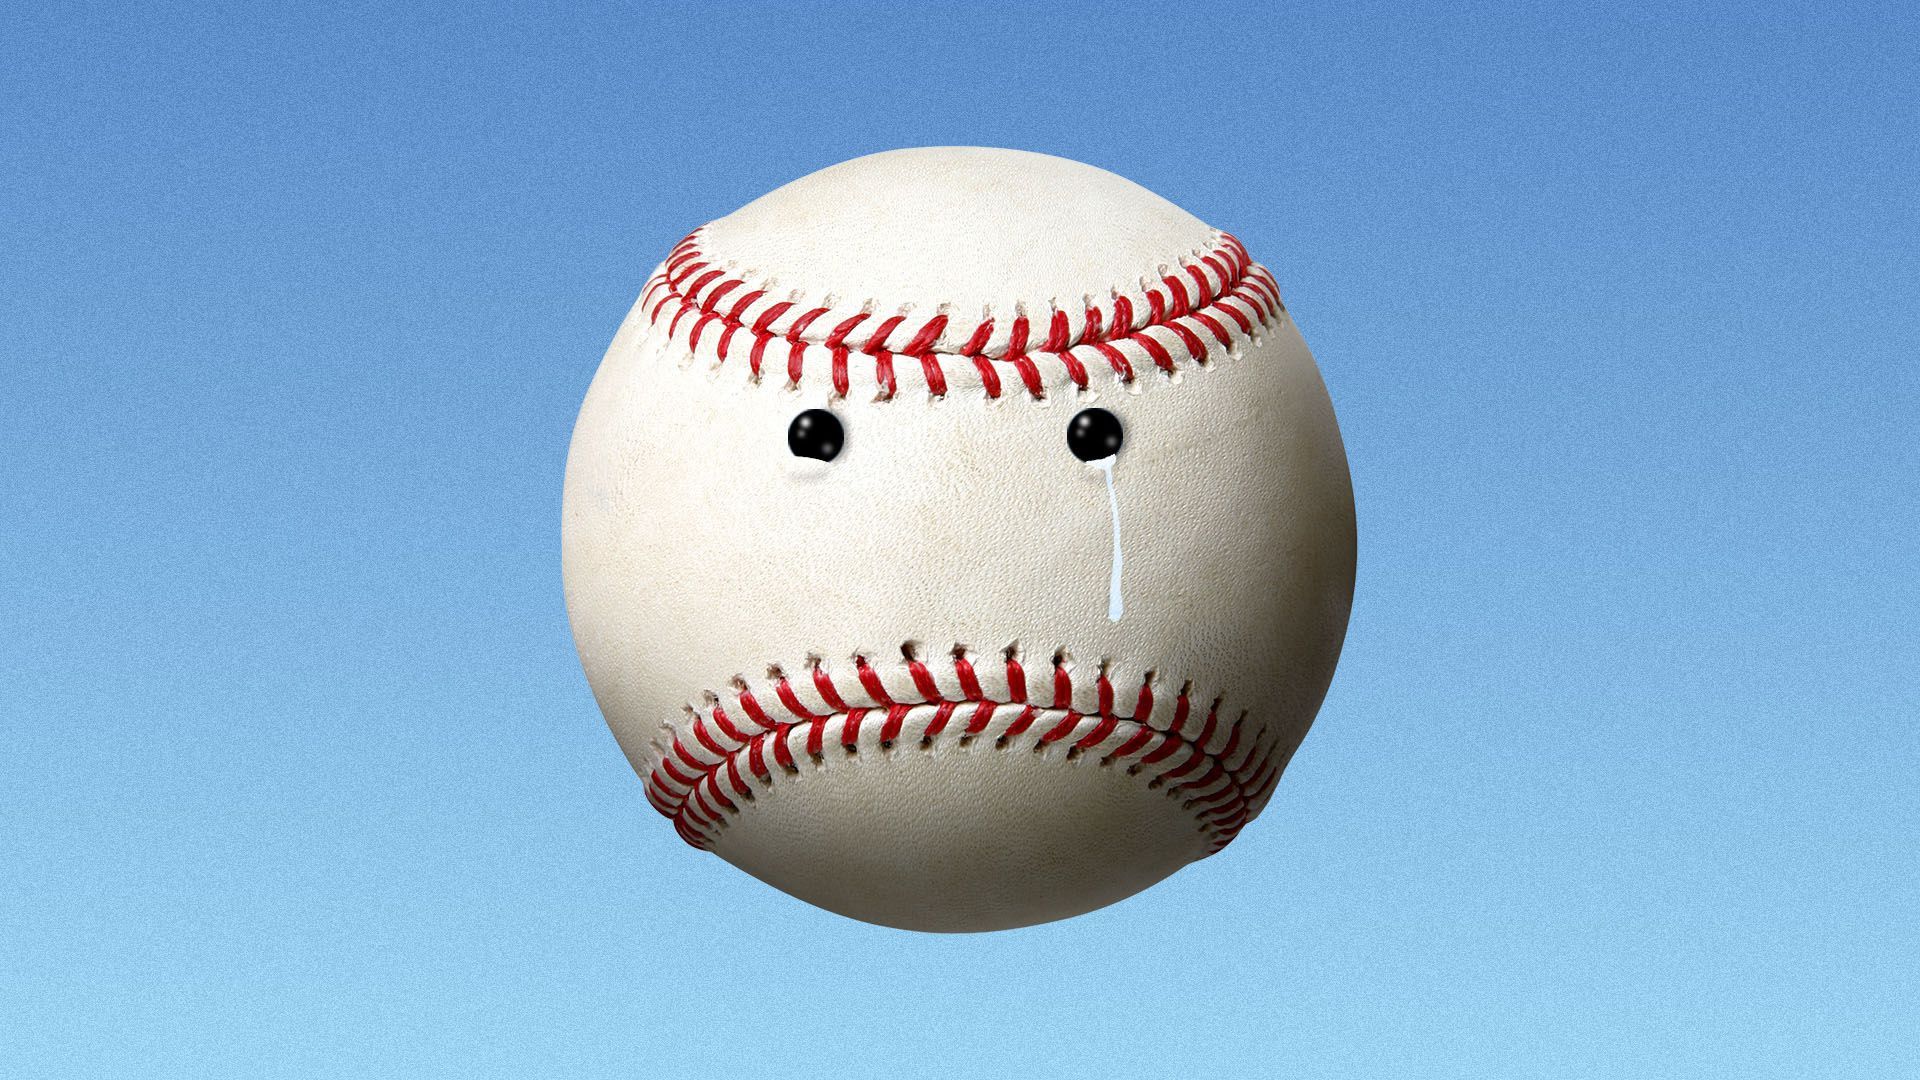 Illustration of a baseball crying